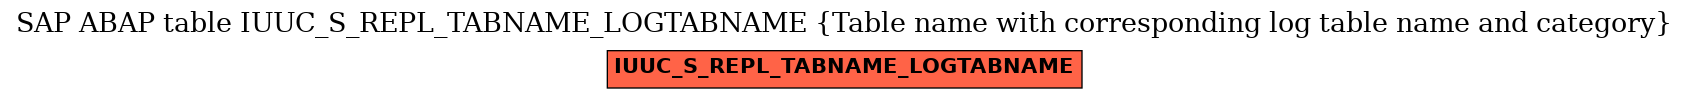 E-R Diagram for table IUUC_S_REPL_TABNAME_LOGTABNAME (Table name with corresponding log table name and category)